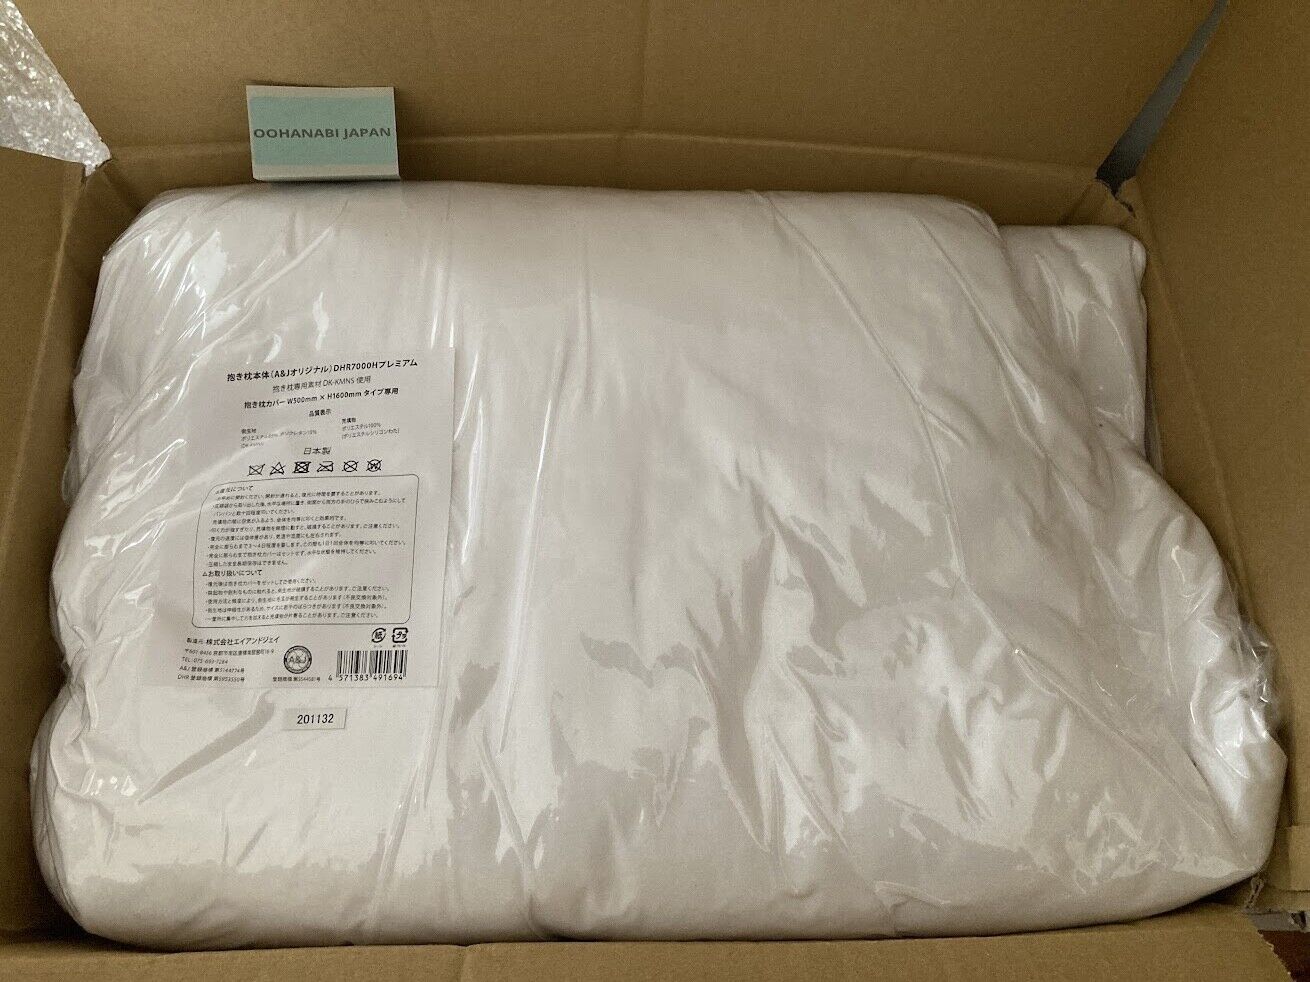 A&J Original Body Pillow Dakimakura Premium Glade 160 x 50 cm DHR7000H NEW 